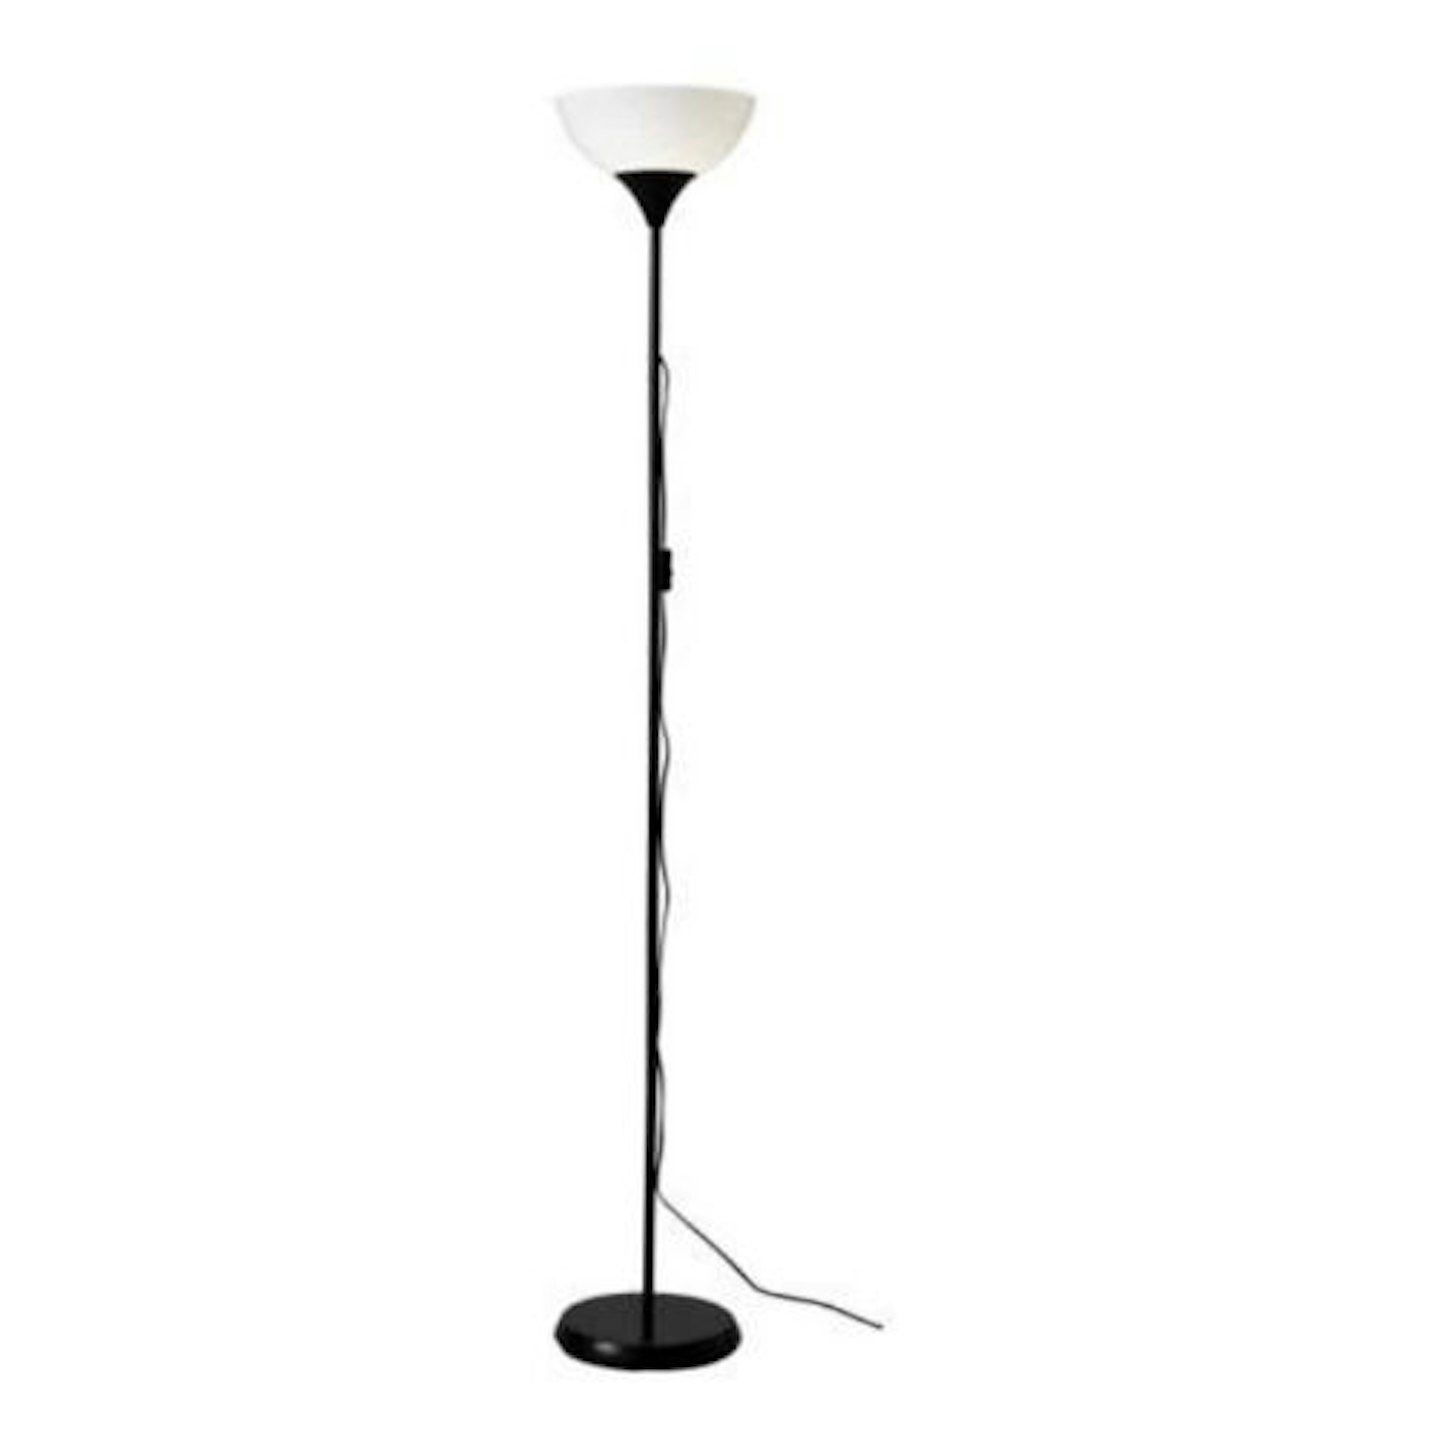 IKEA Floor Uplighter Light Lamp